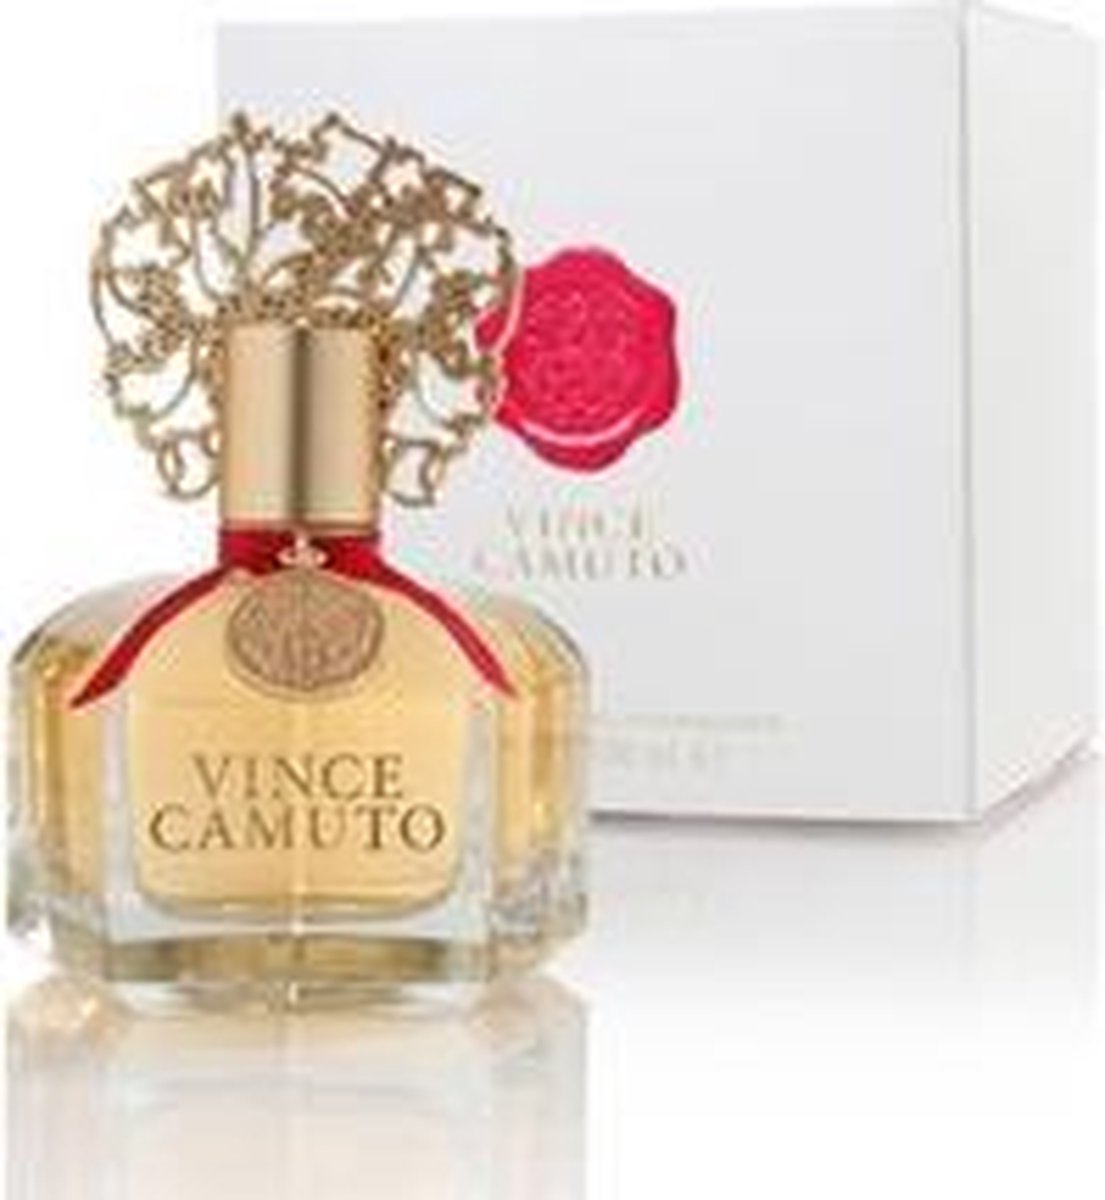 Vince Camuto - Eau de parfum spray - 100 ml